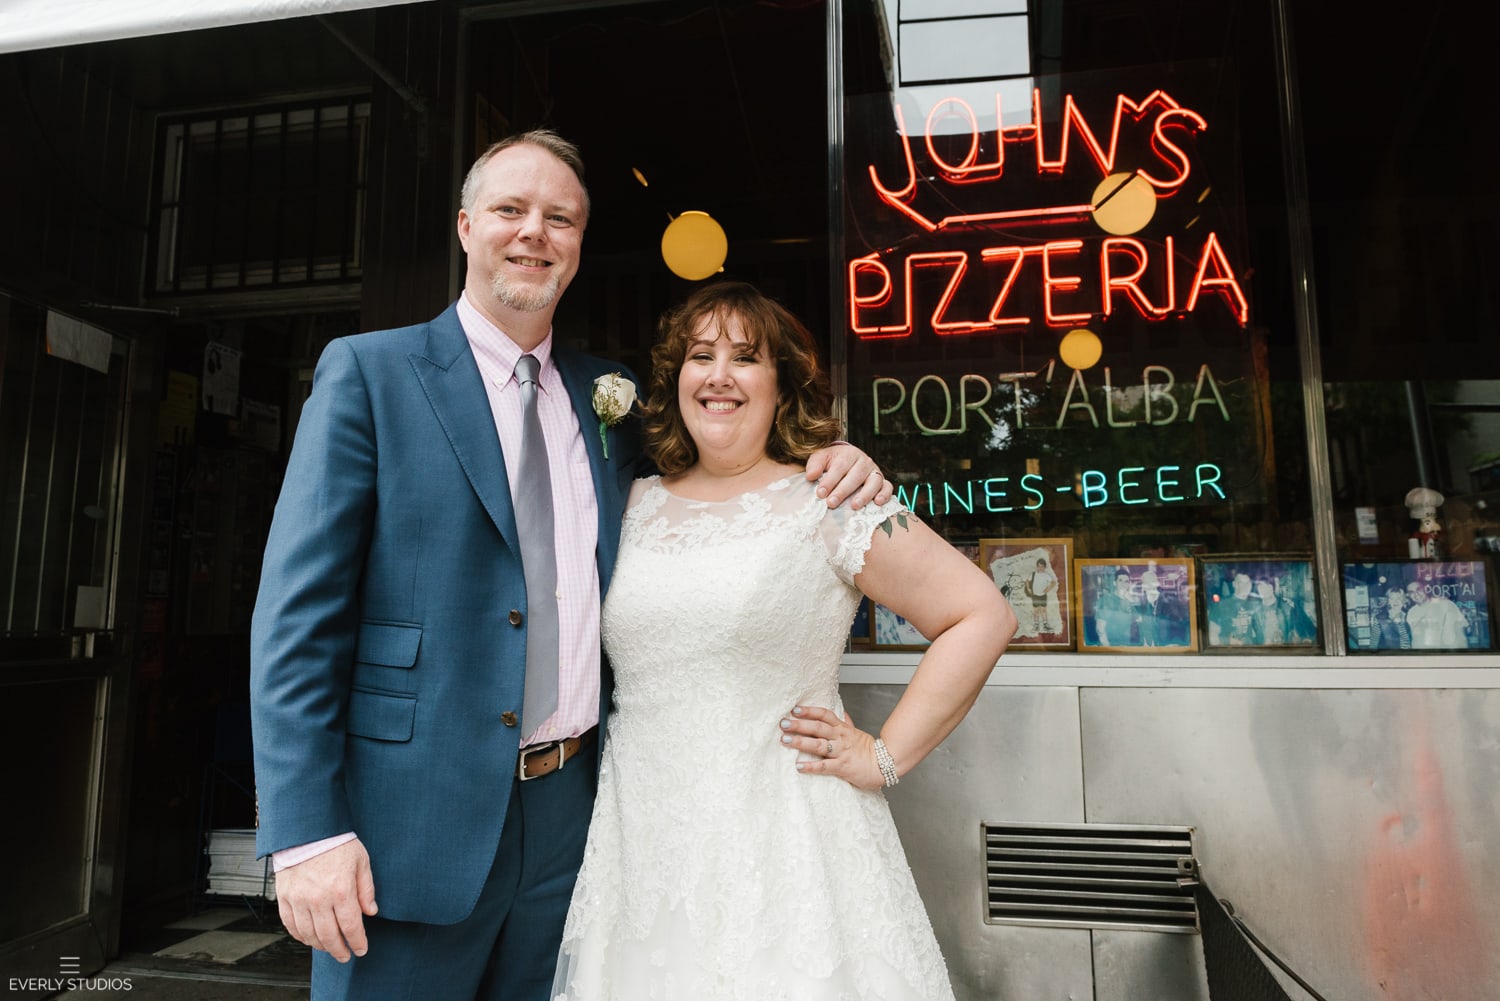 New York City Hall wedding and pizza party wedding reception at John's Pizza on Bleecker. Photos by New York wedding photographer Everly Studios, www.everlystudios.com